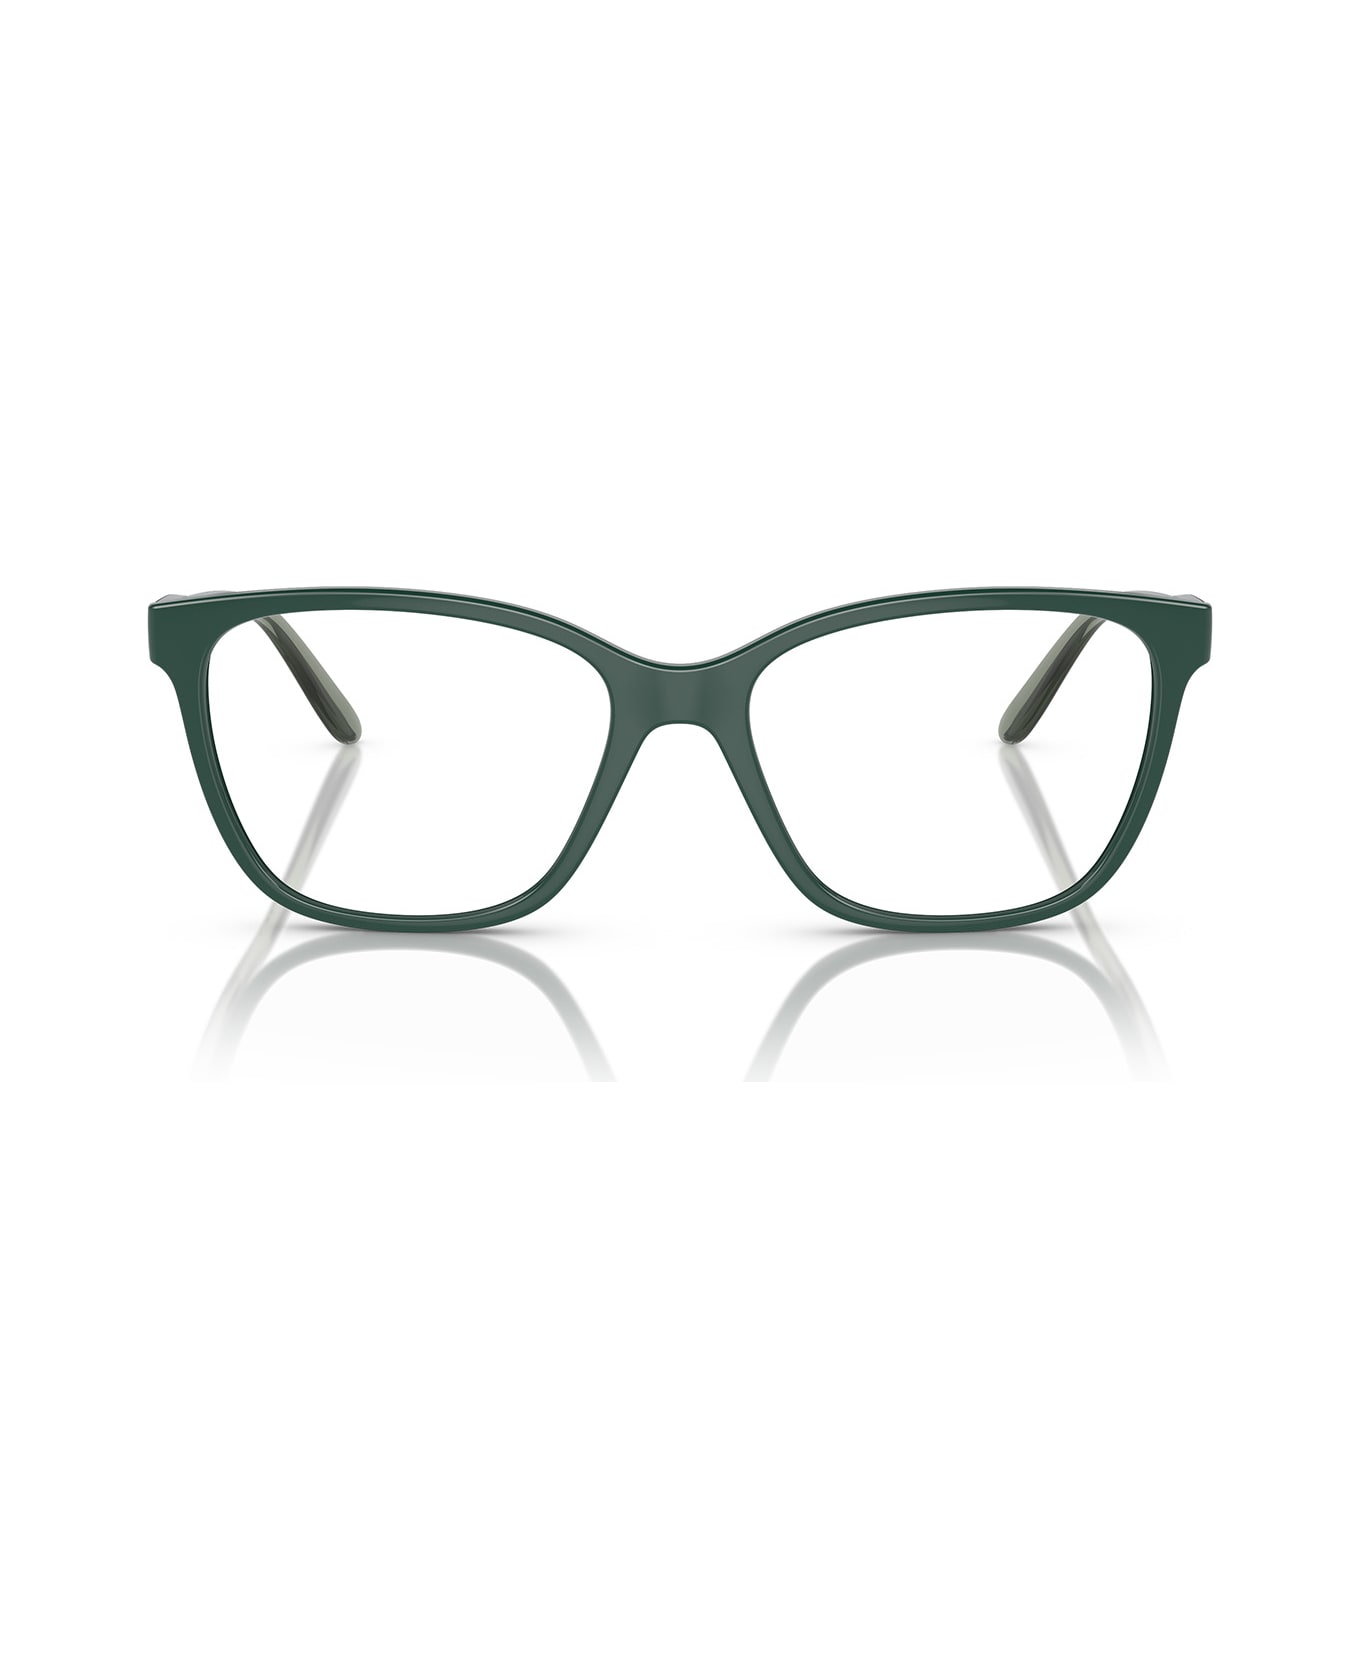 Vogue Eyewear Vo5518 Full Dark Green Glasses - Full Dark Green アイウェア